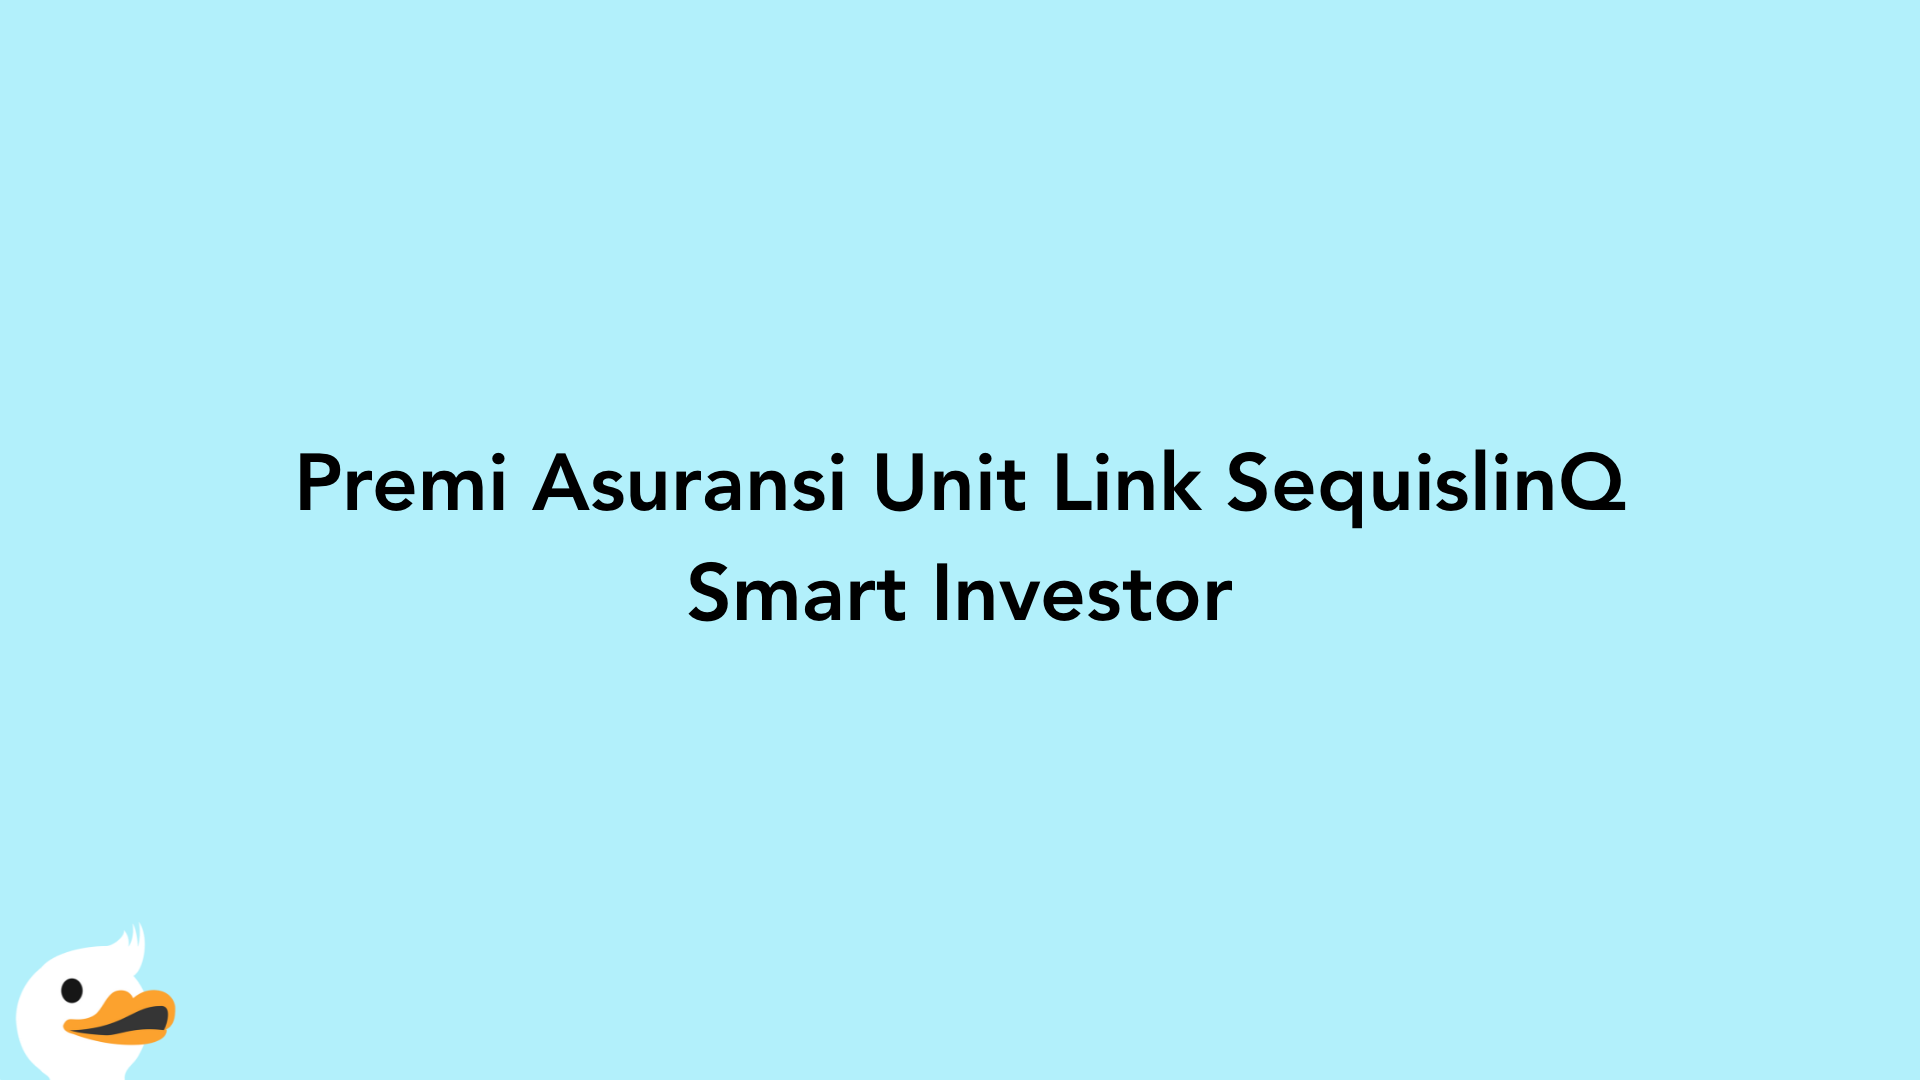 Premi Asuransi Unit Link SequislinQ Smart Investor